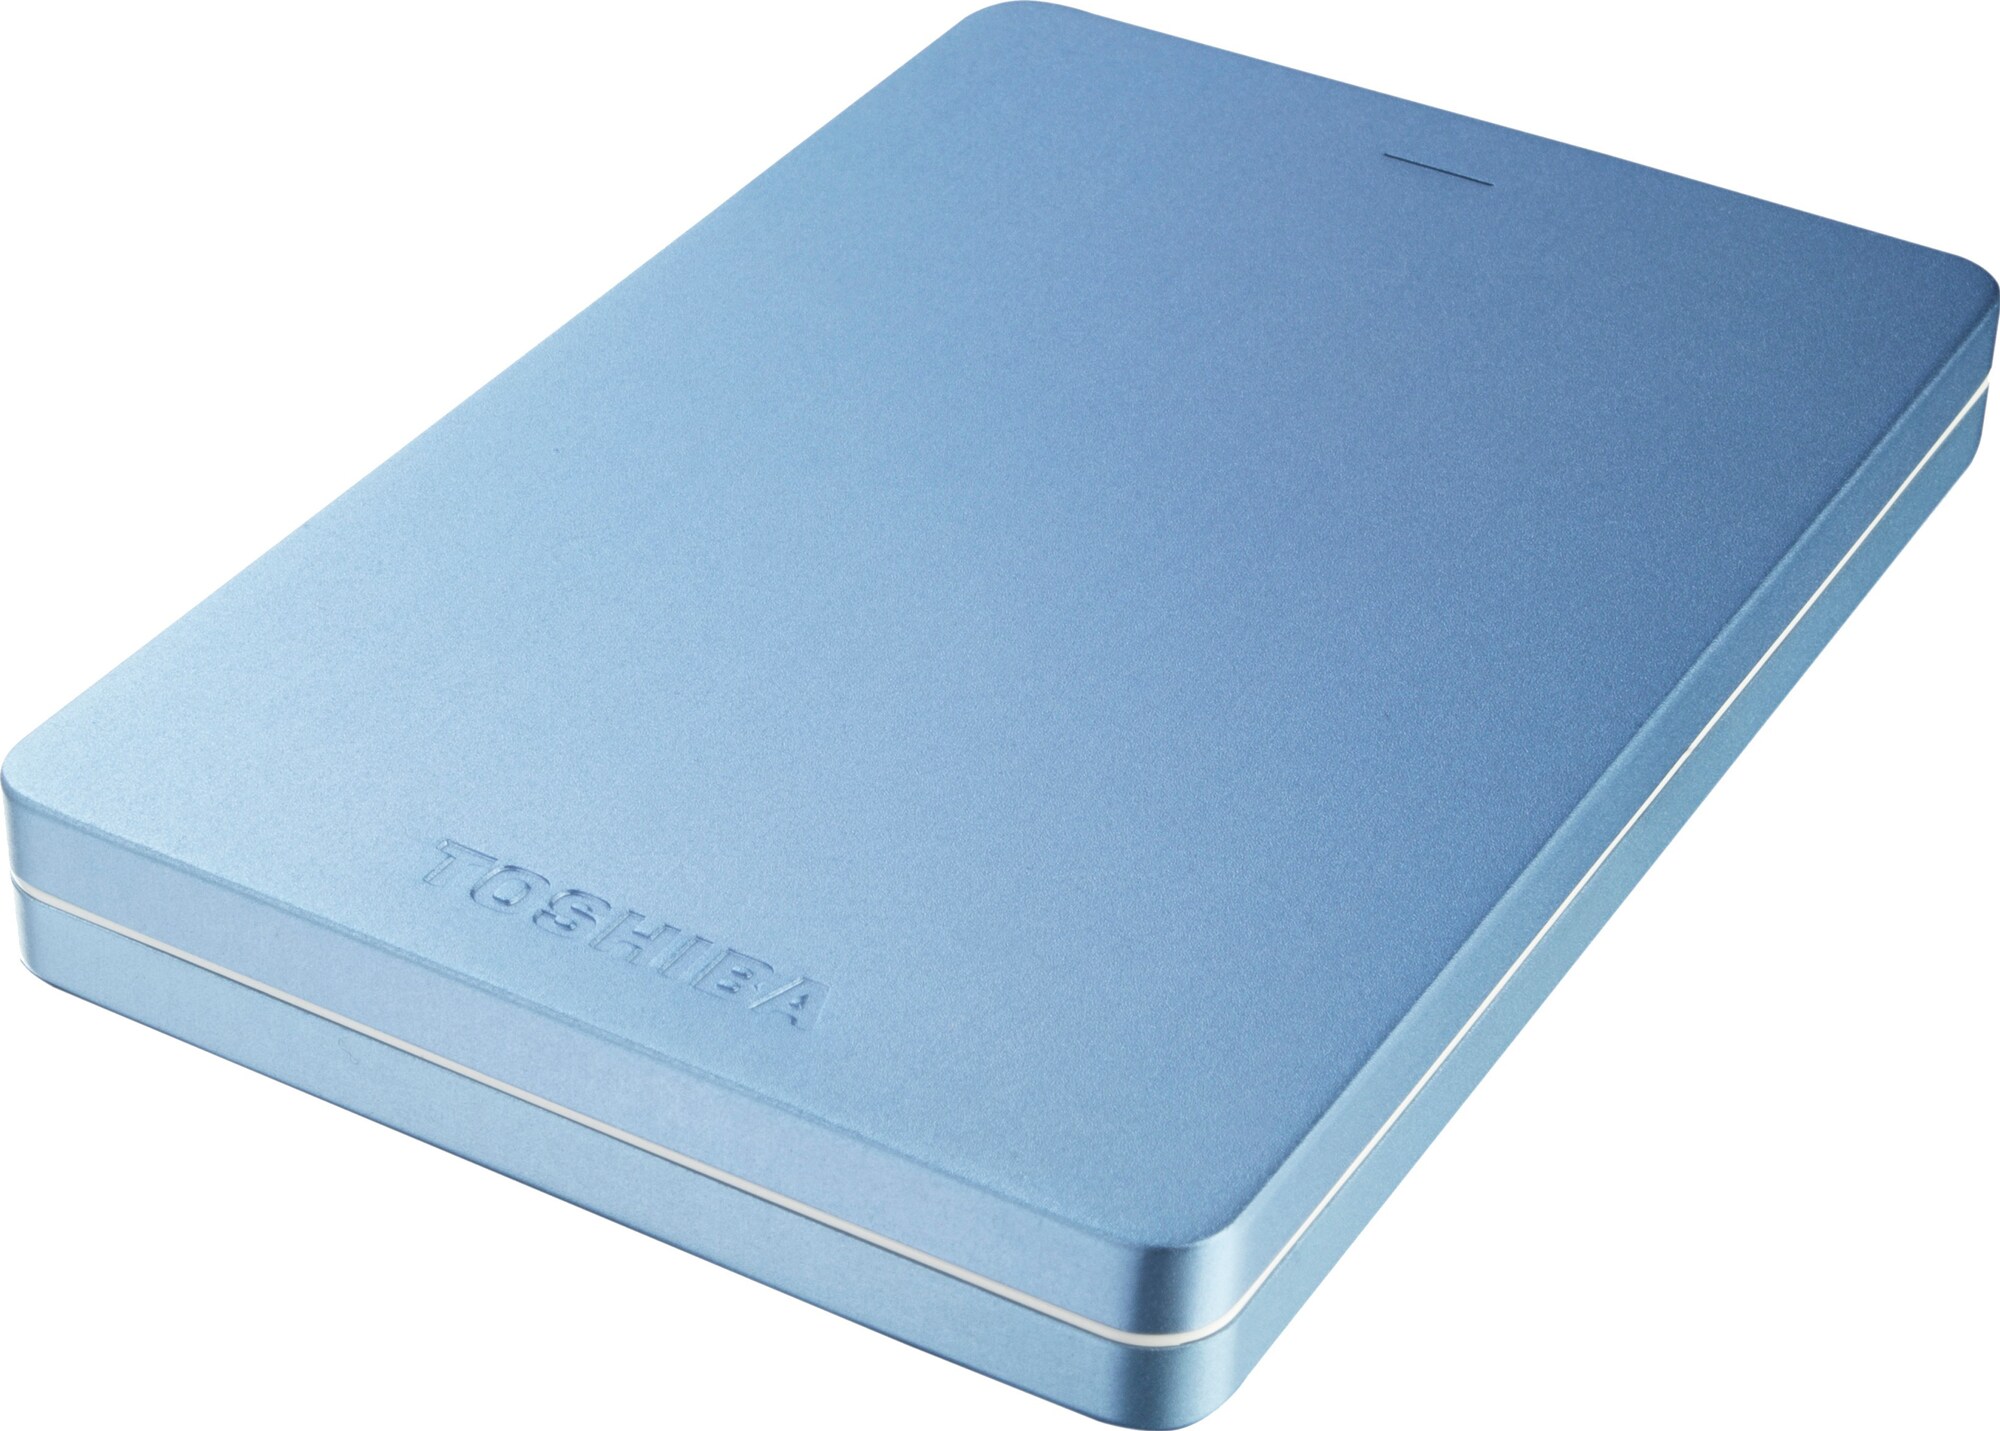 Toshiba Canvio Alu 2 TB ekstern harddisk (blå) - Elkjøp